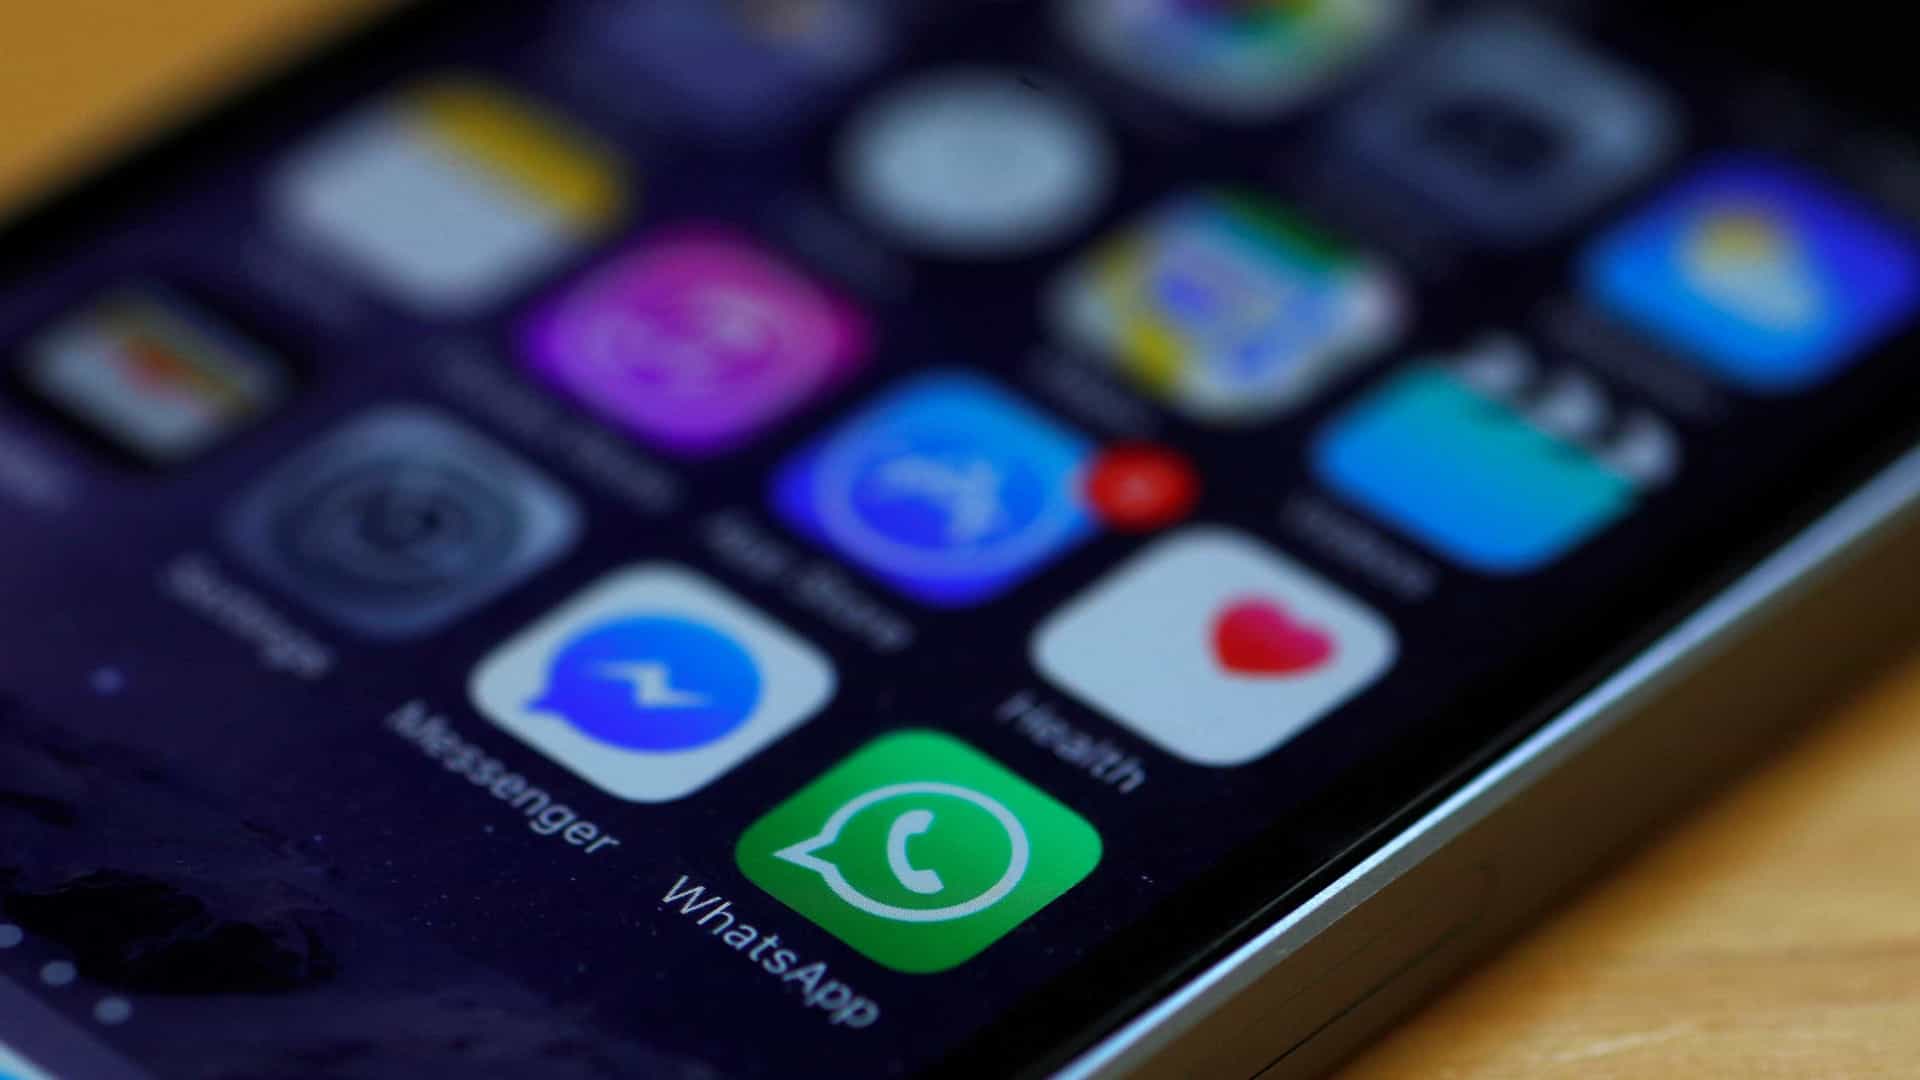 Novo golpe que circula pelo aplicativo WhatsApp rouba dados pessoais